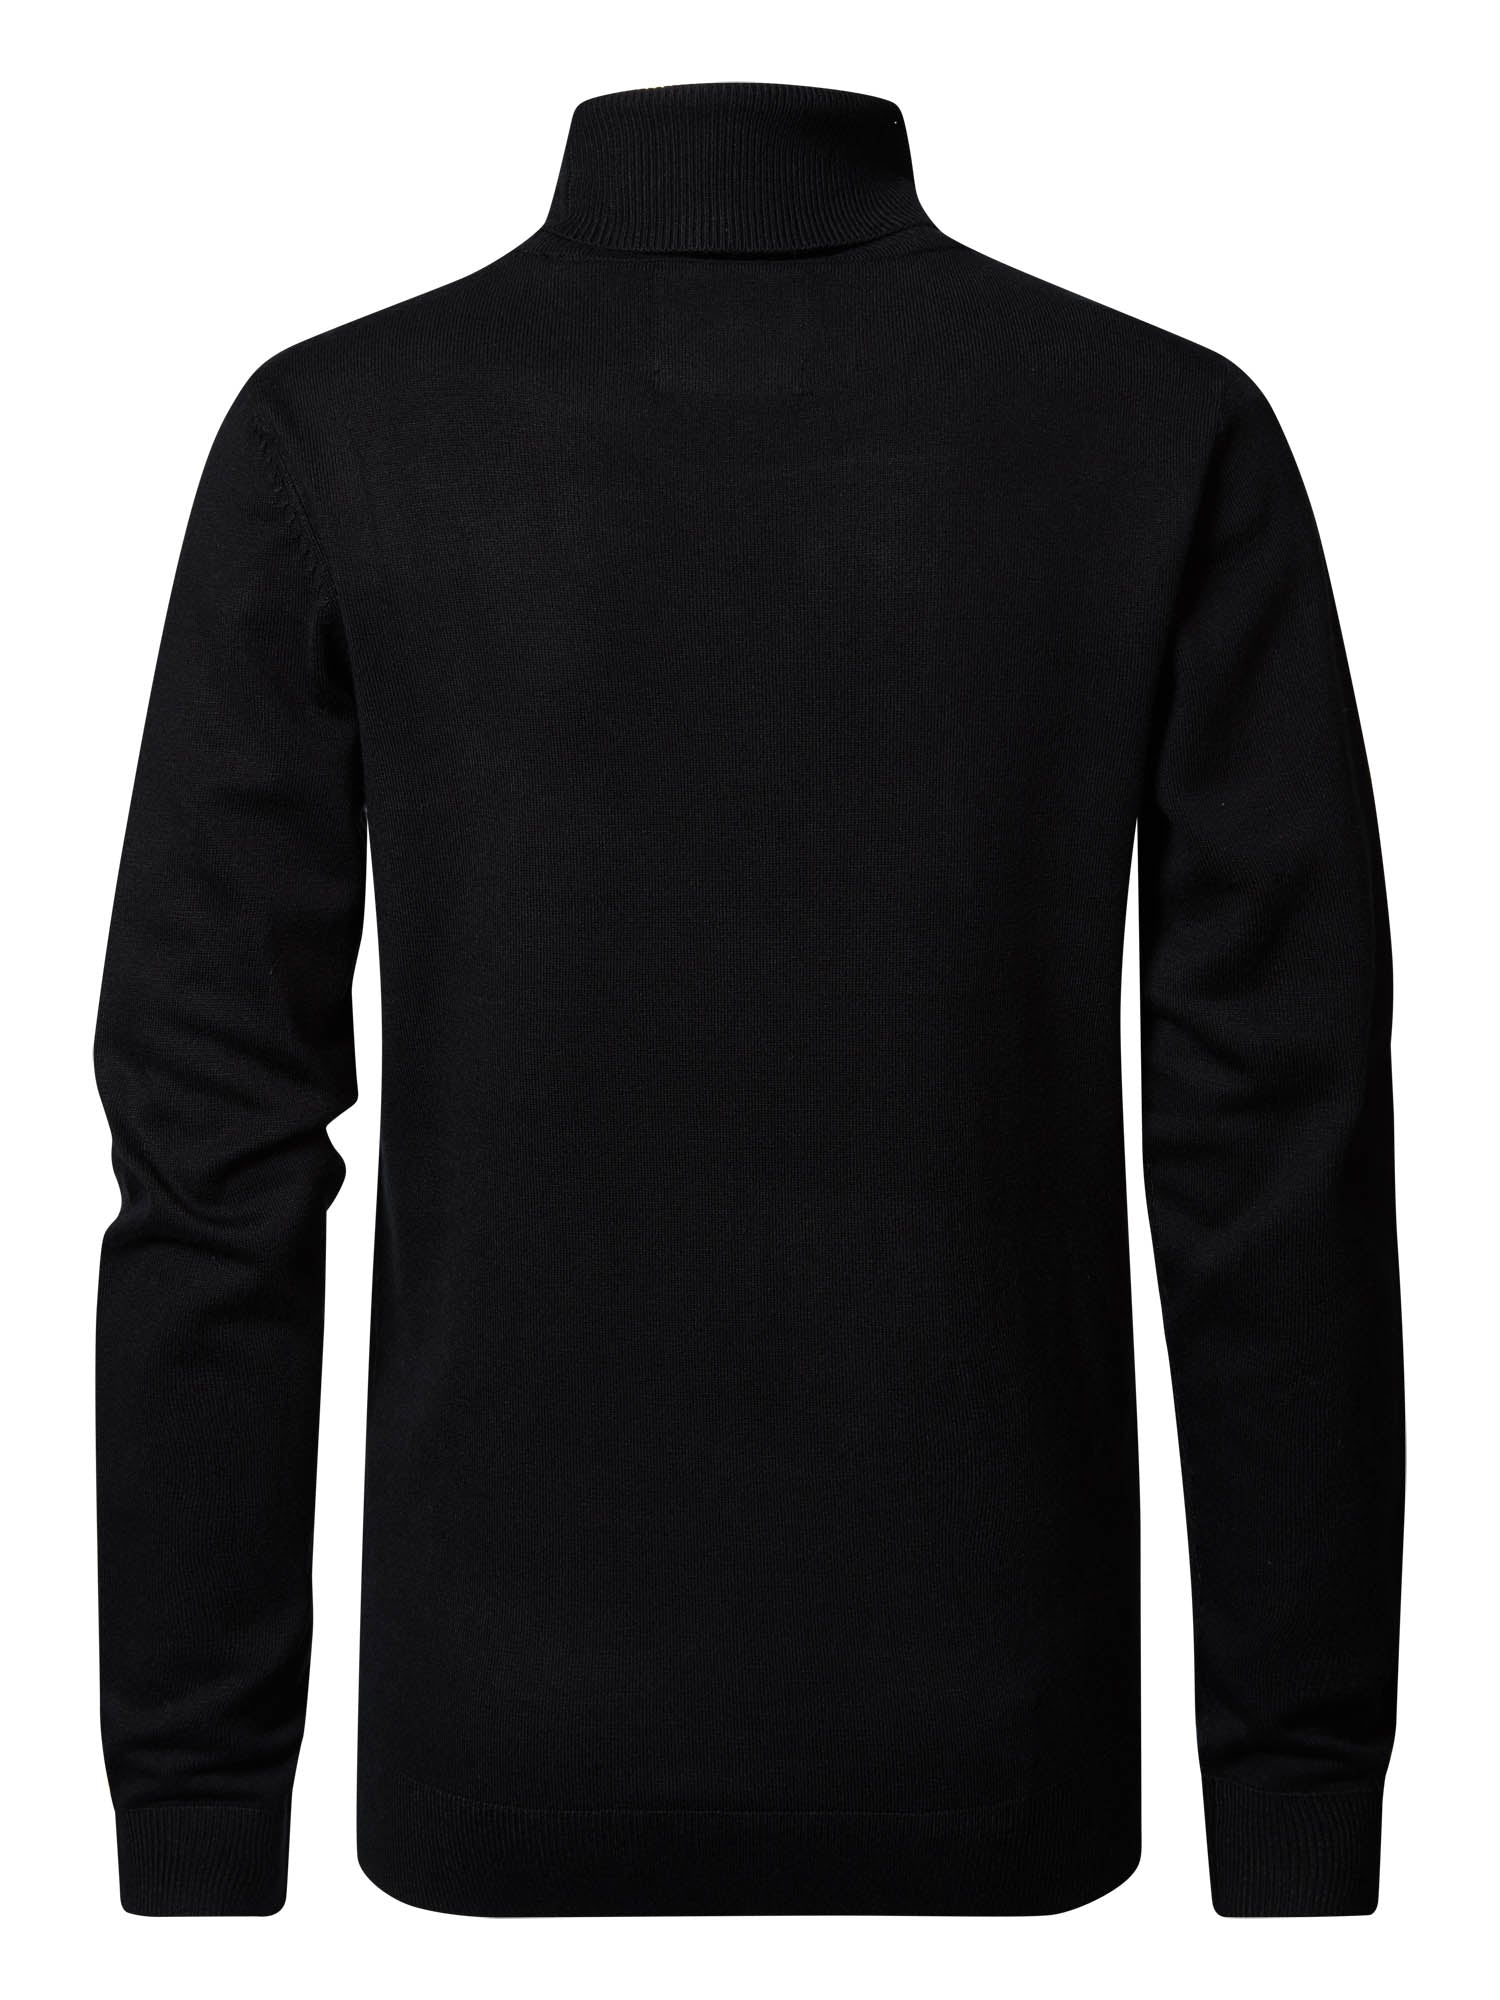 Jongens Boys Knitwear Collar Basic van Petrol in de kleur Black in maat 164.